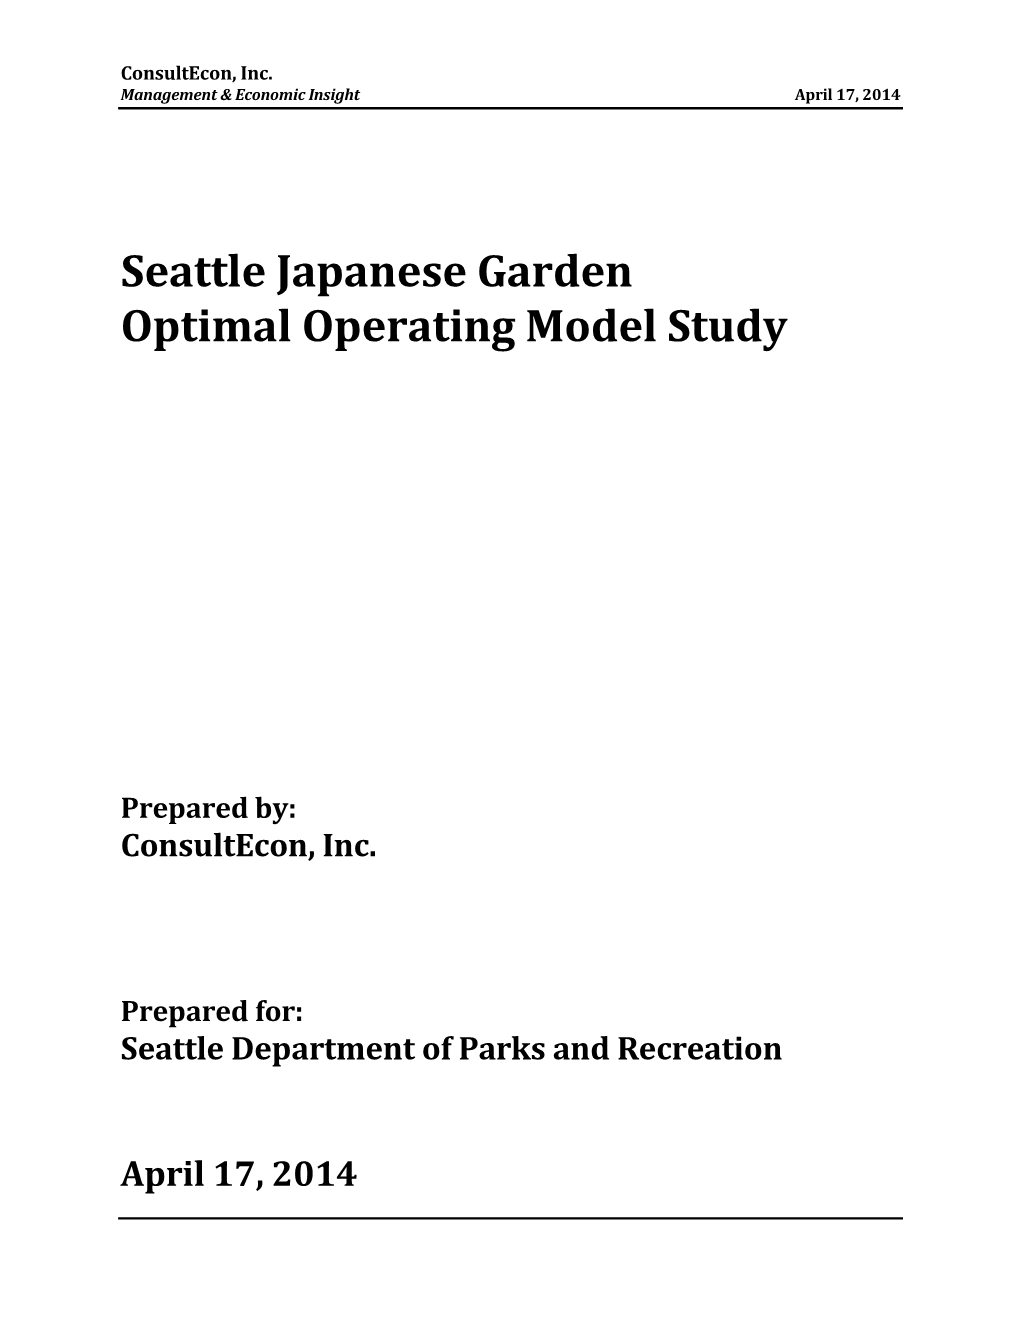 Seattle Japanese Garden Optimal Operating Model Study